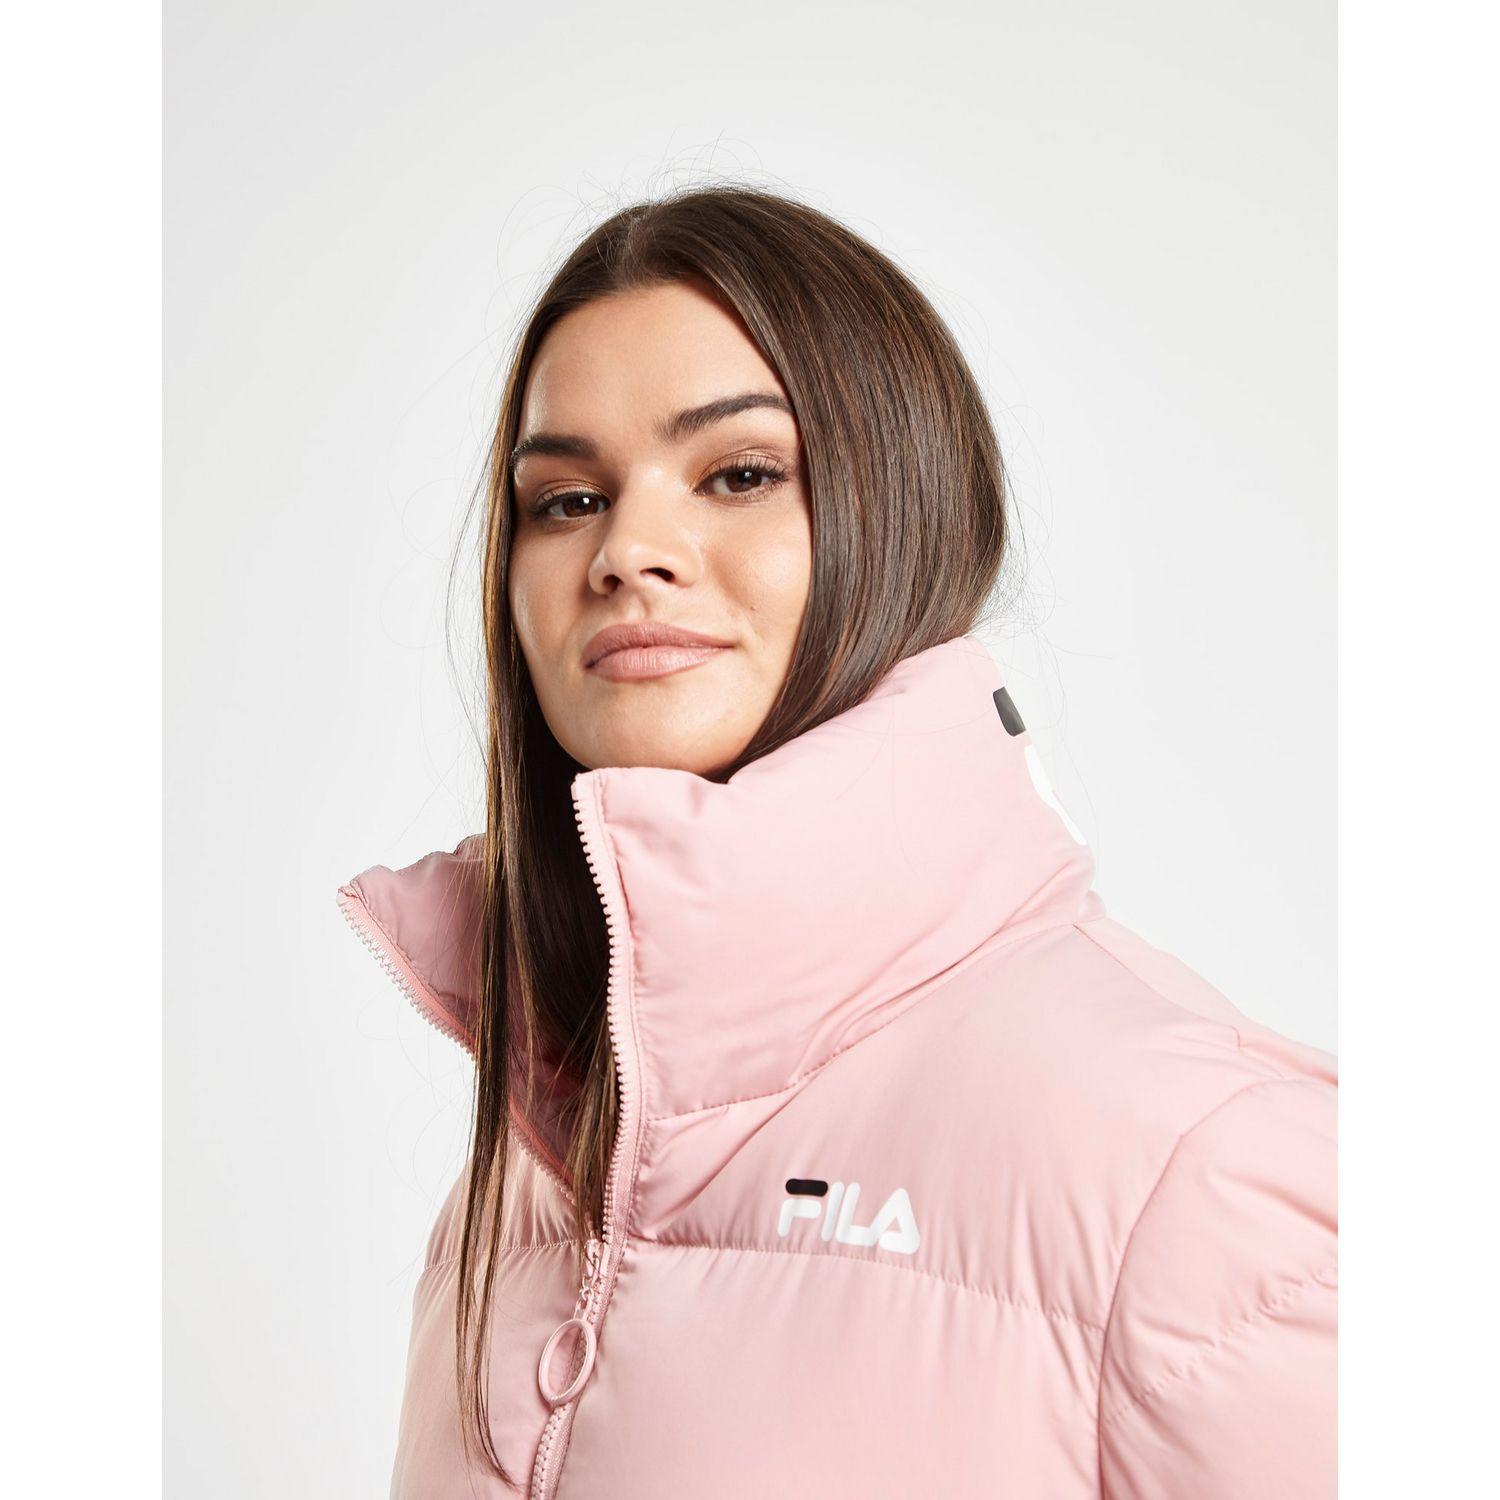 Fila Logo Crop Puffer Jacket in Pink/White/Black (Pink) - Lyst